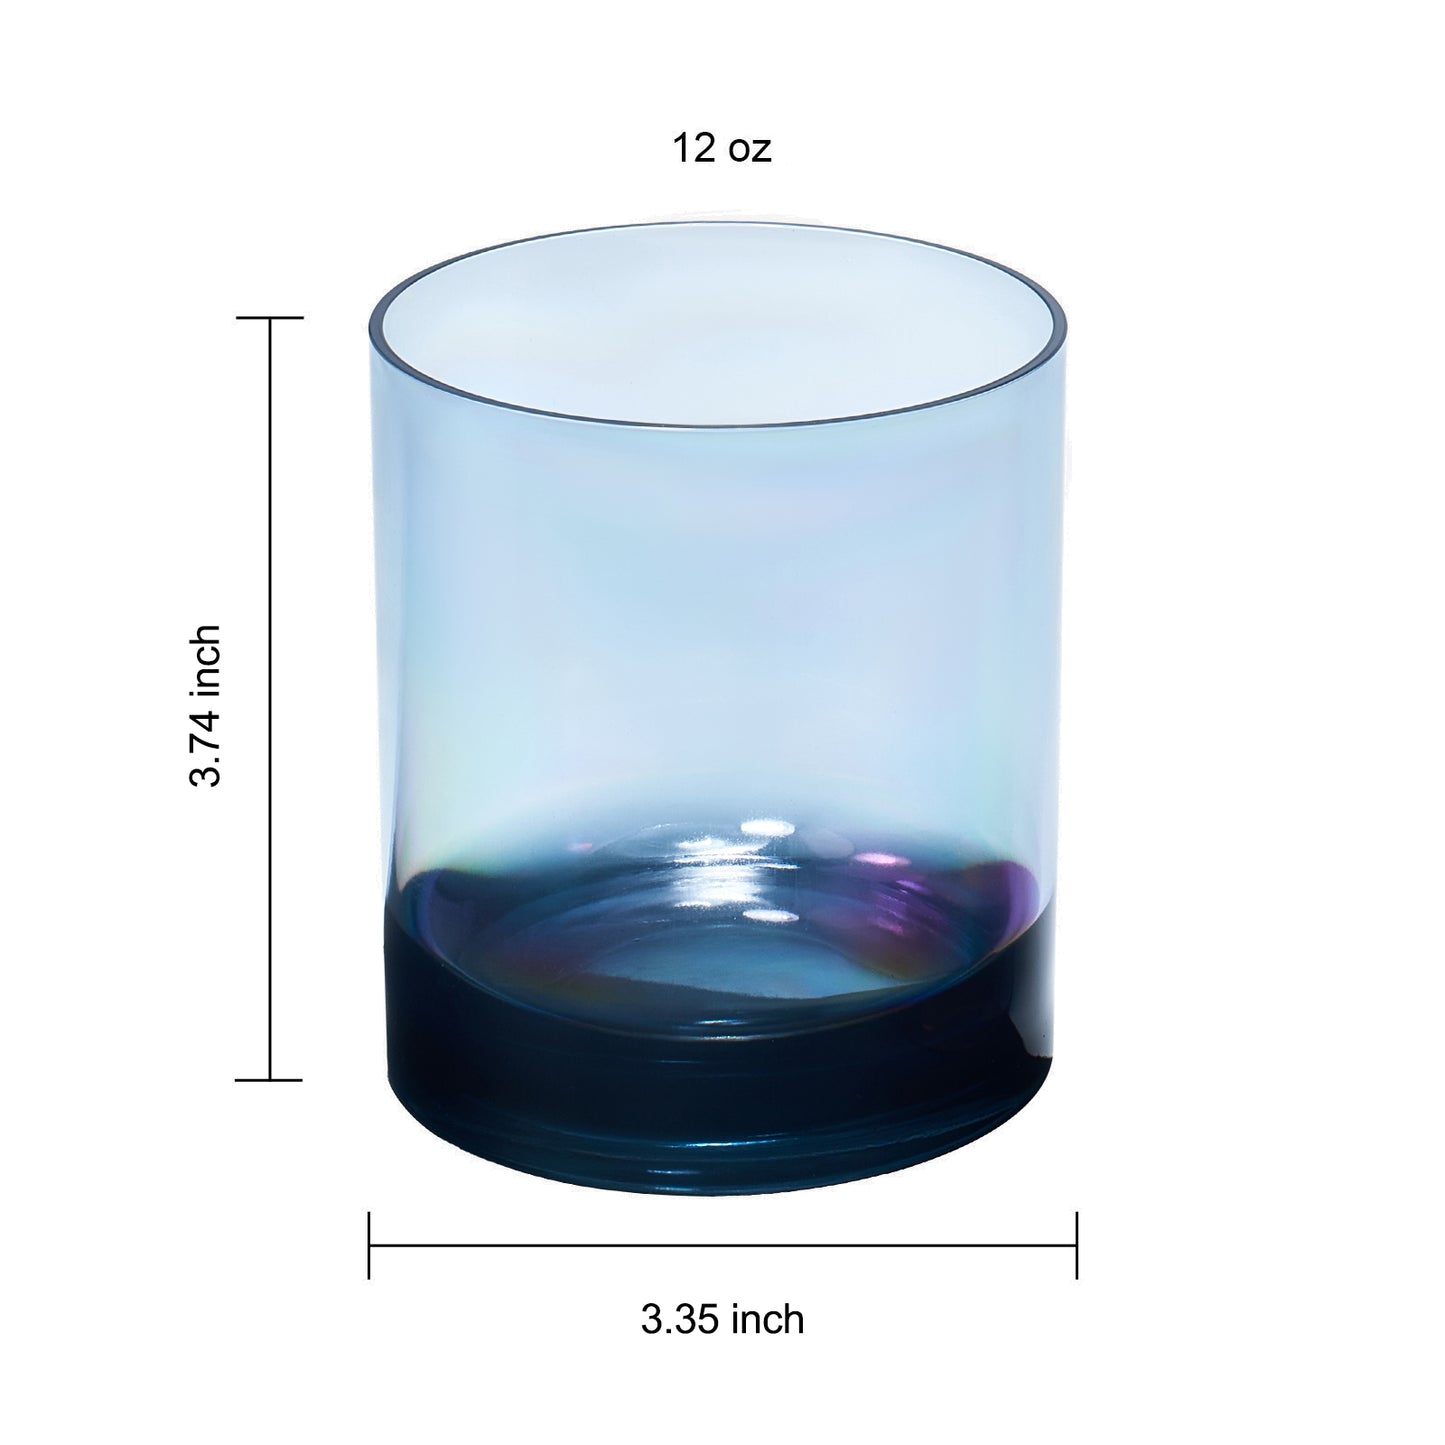 Eze Acrylic Lowball Tumbler Glassware, Set of 8